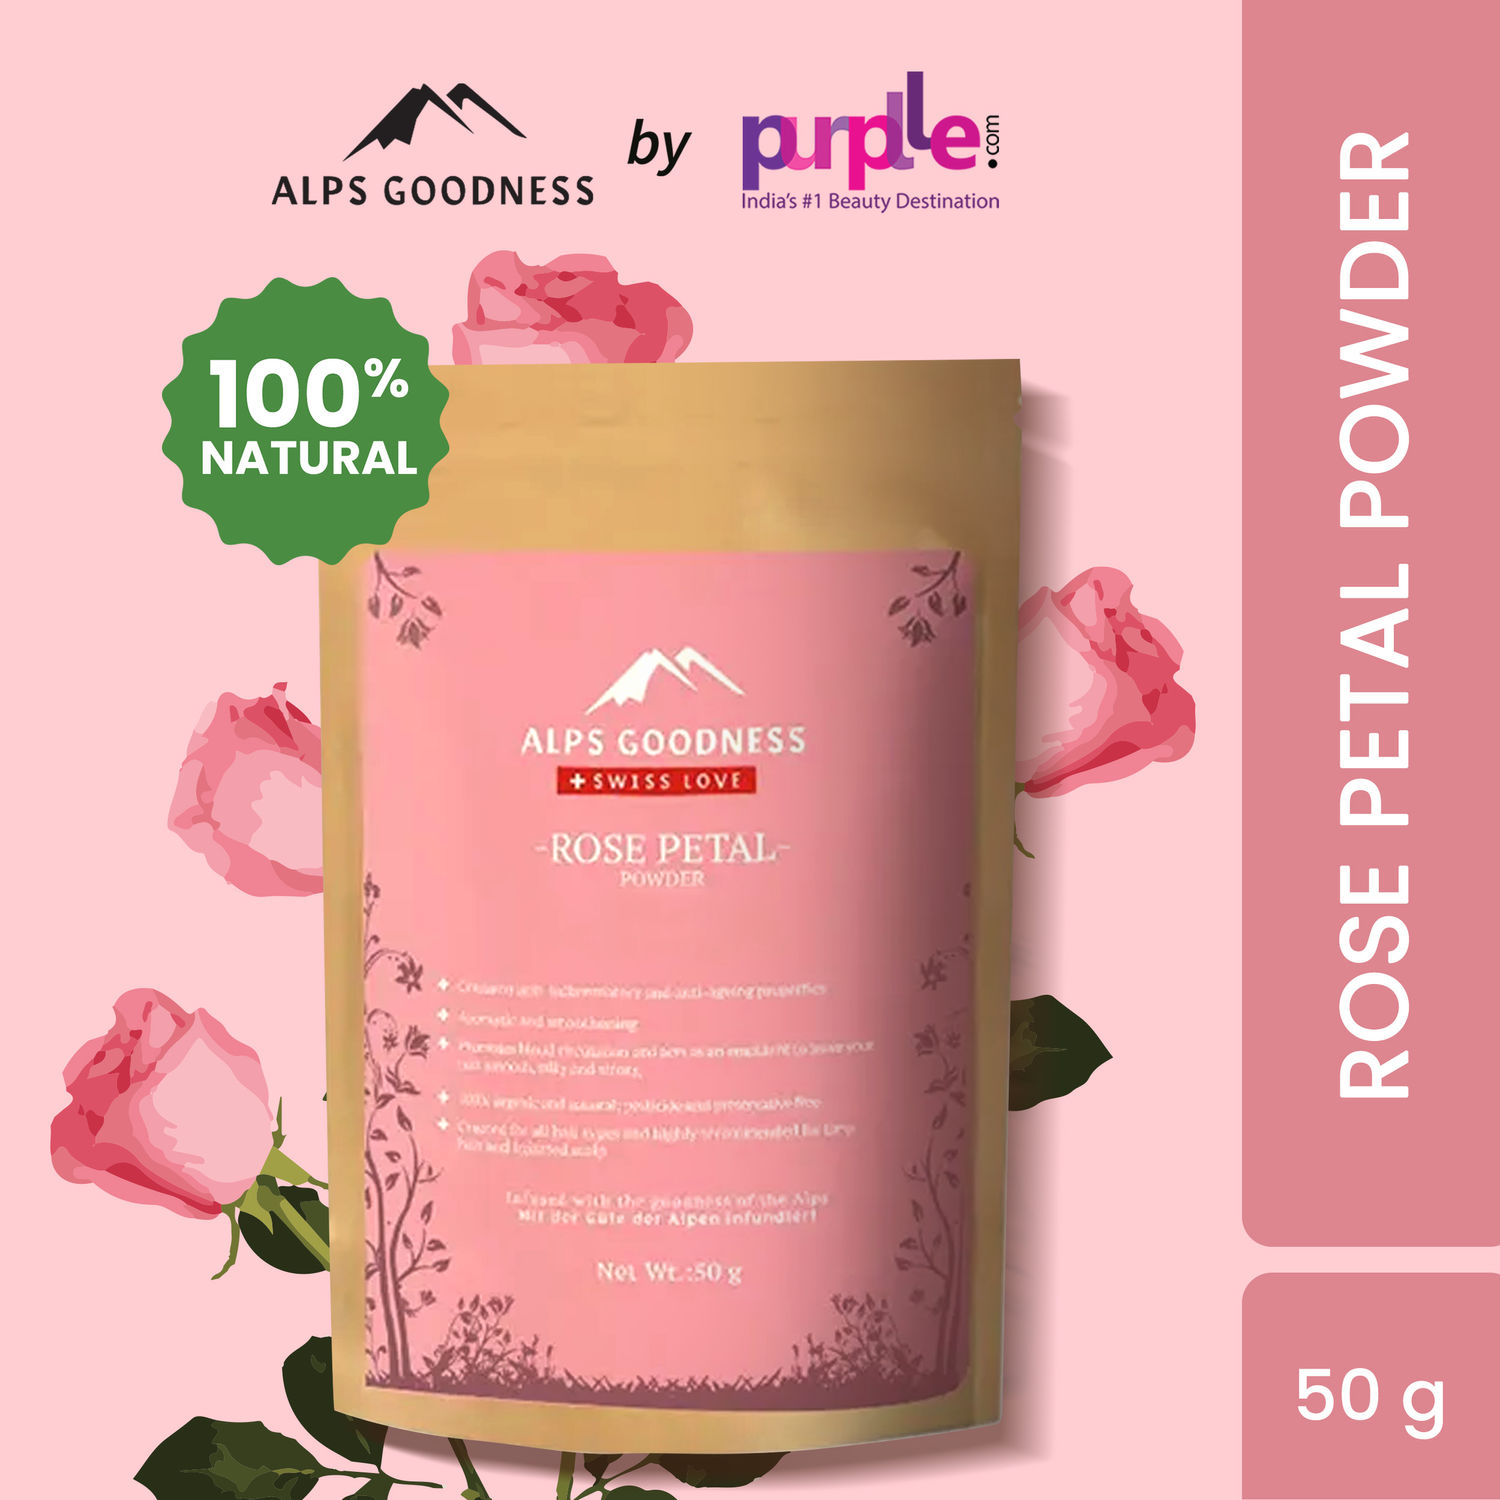 Alps Goodness Powder - Rose Petal (50 g) | 100% Natural Powder | No Chemicals, No Preservatives, No Pesticides| Hydrating Face Mask